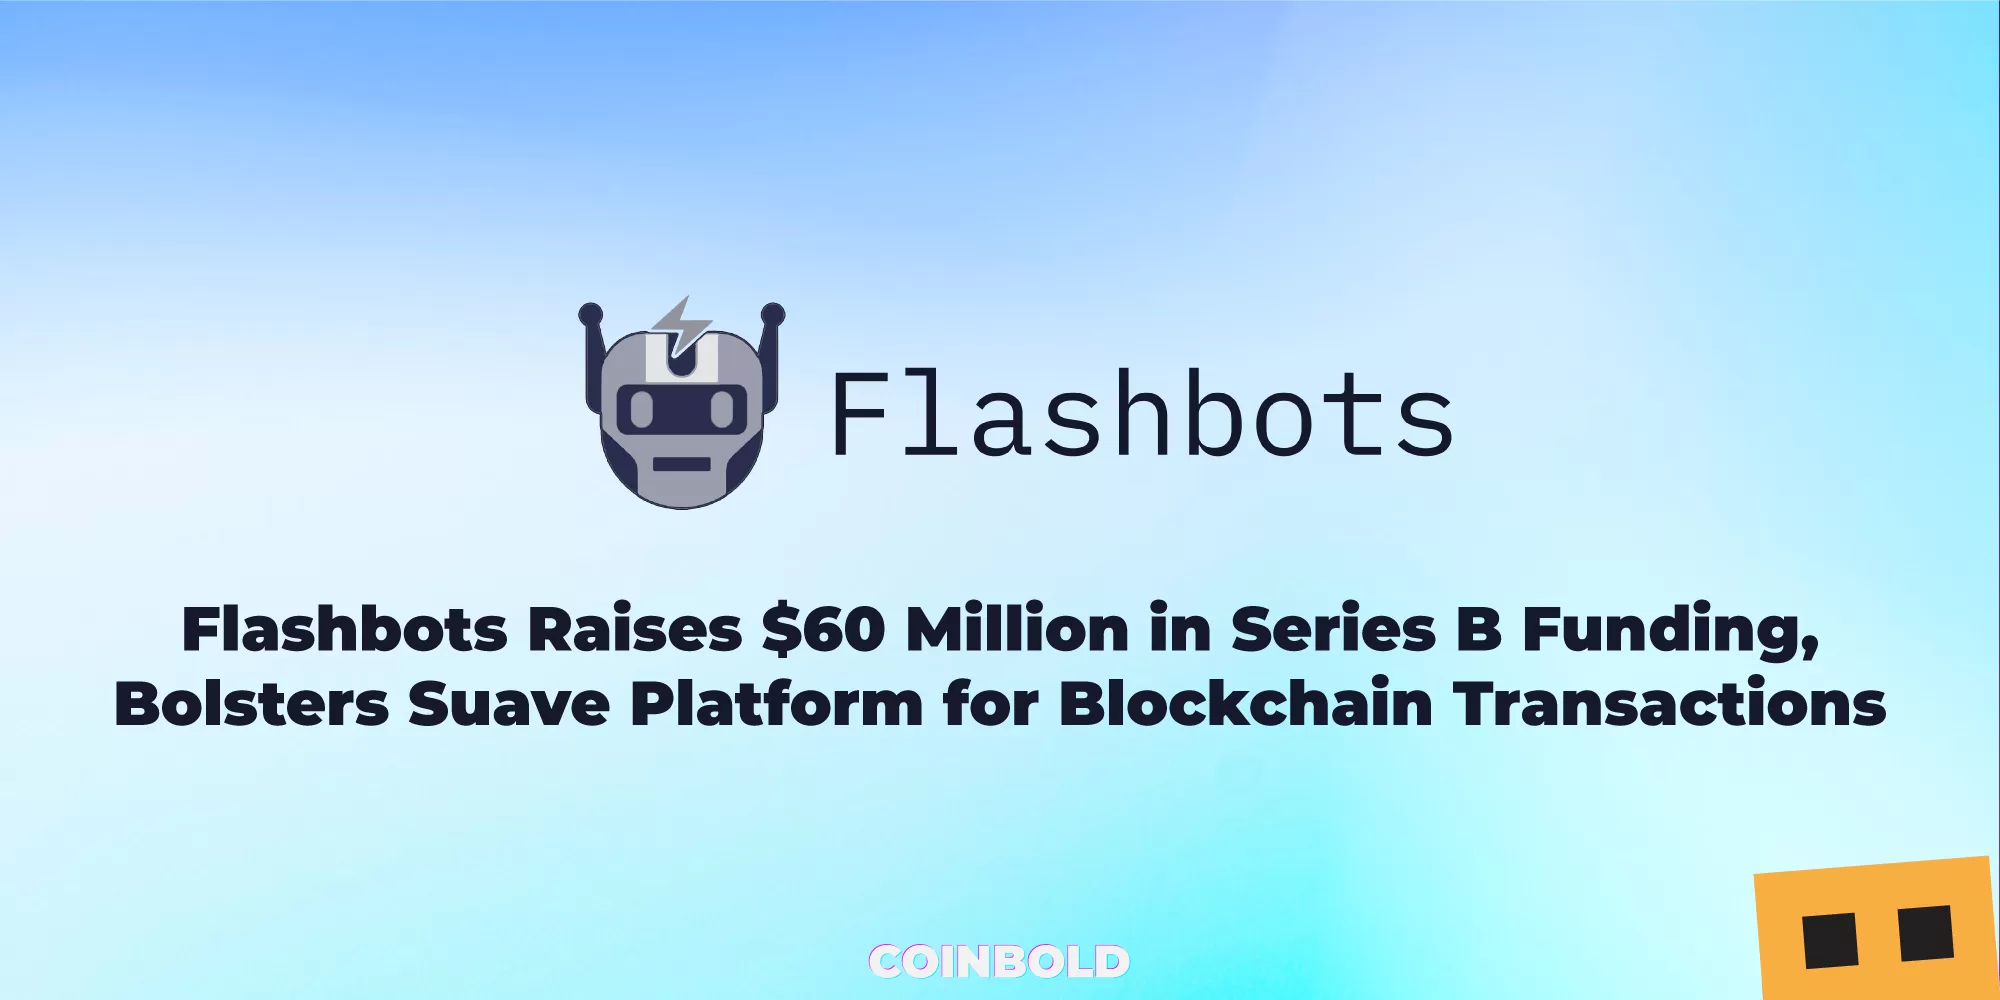 Flashbots Raises $60 Million in Series B Funding, Bolsters Suave Platform for Blockchain Transactions